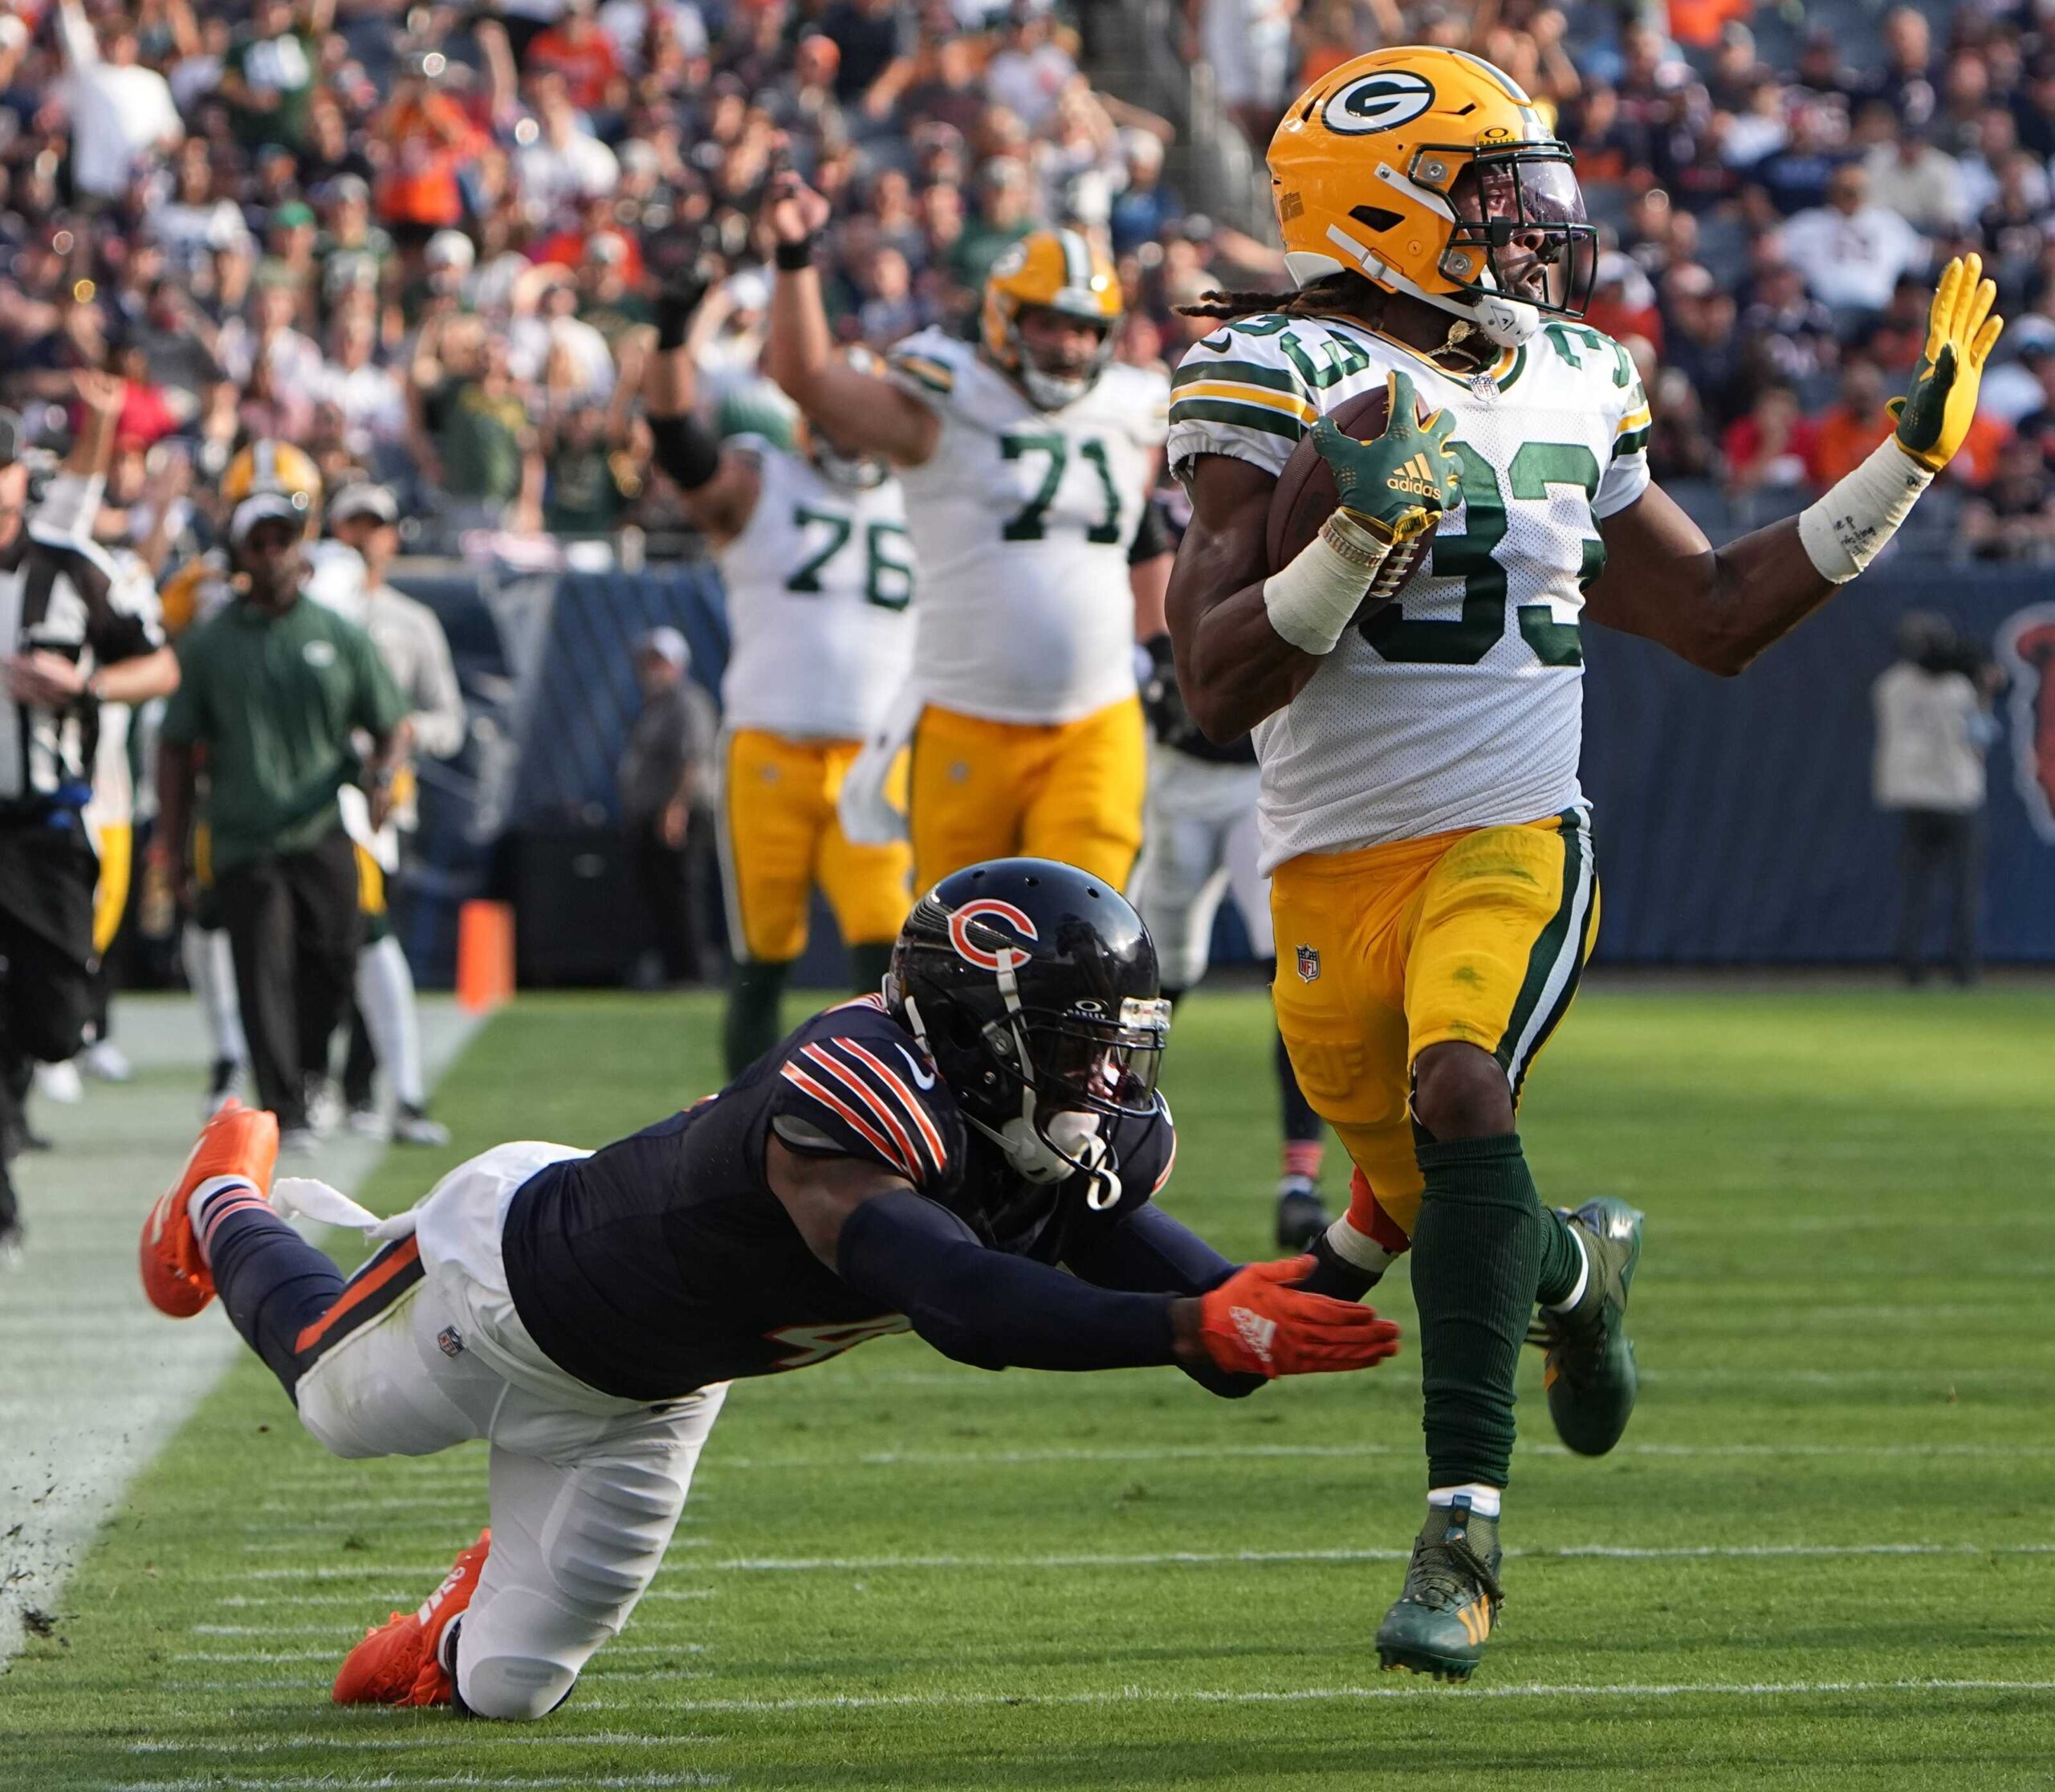 Aaron Jones scores two touchdowns in Packers season-opening win over Bears